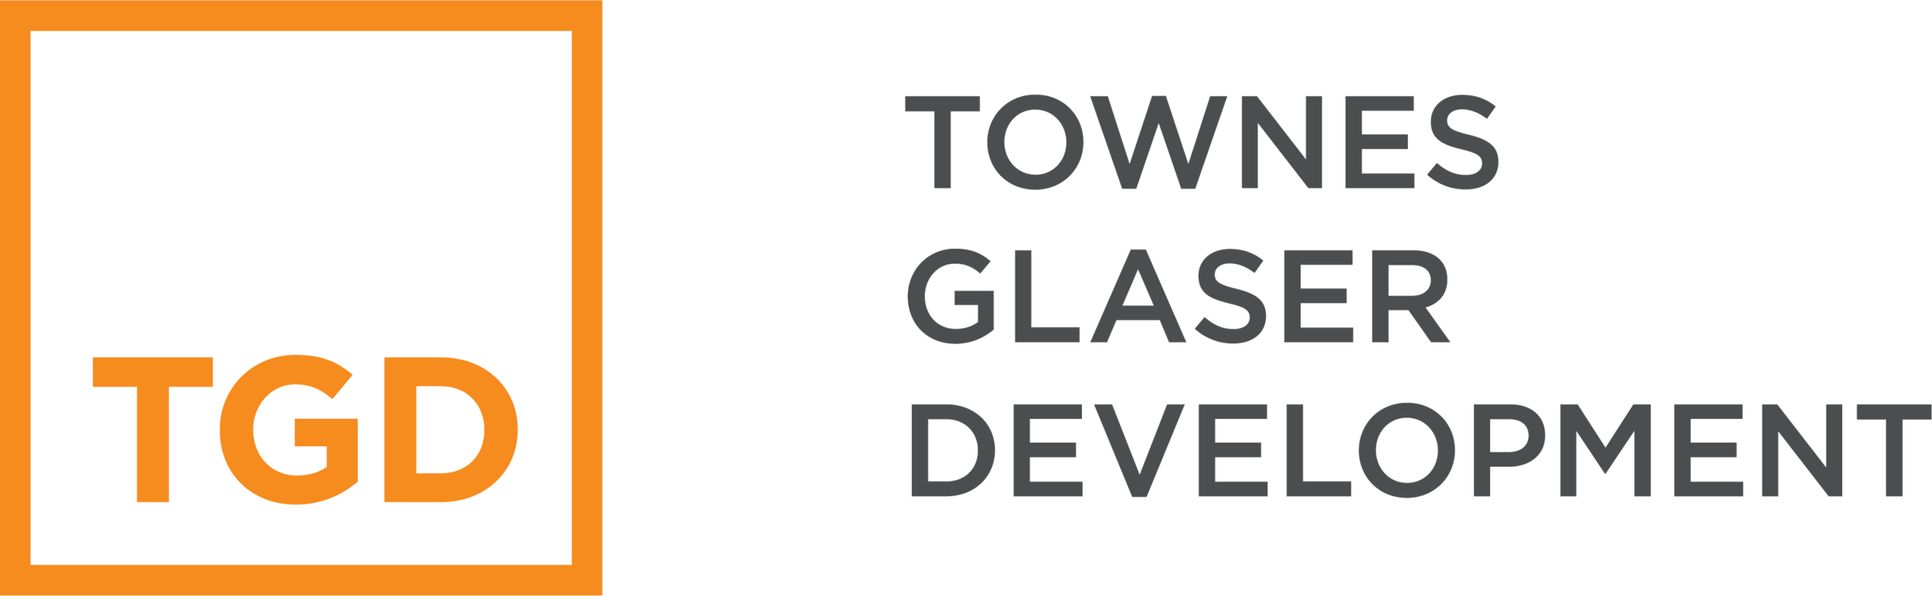 Townes Glaser Development,60618